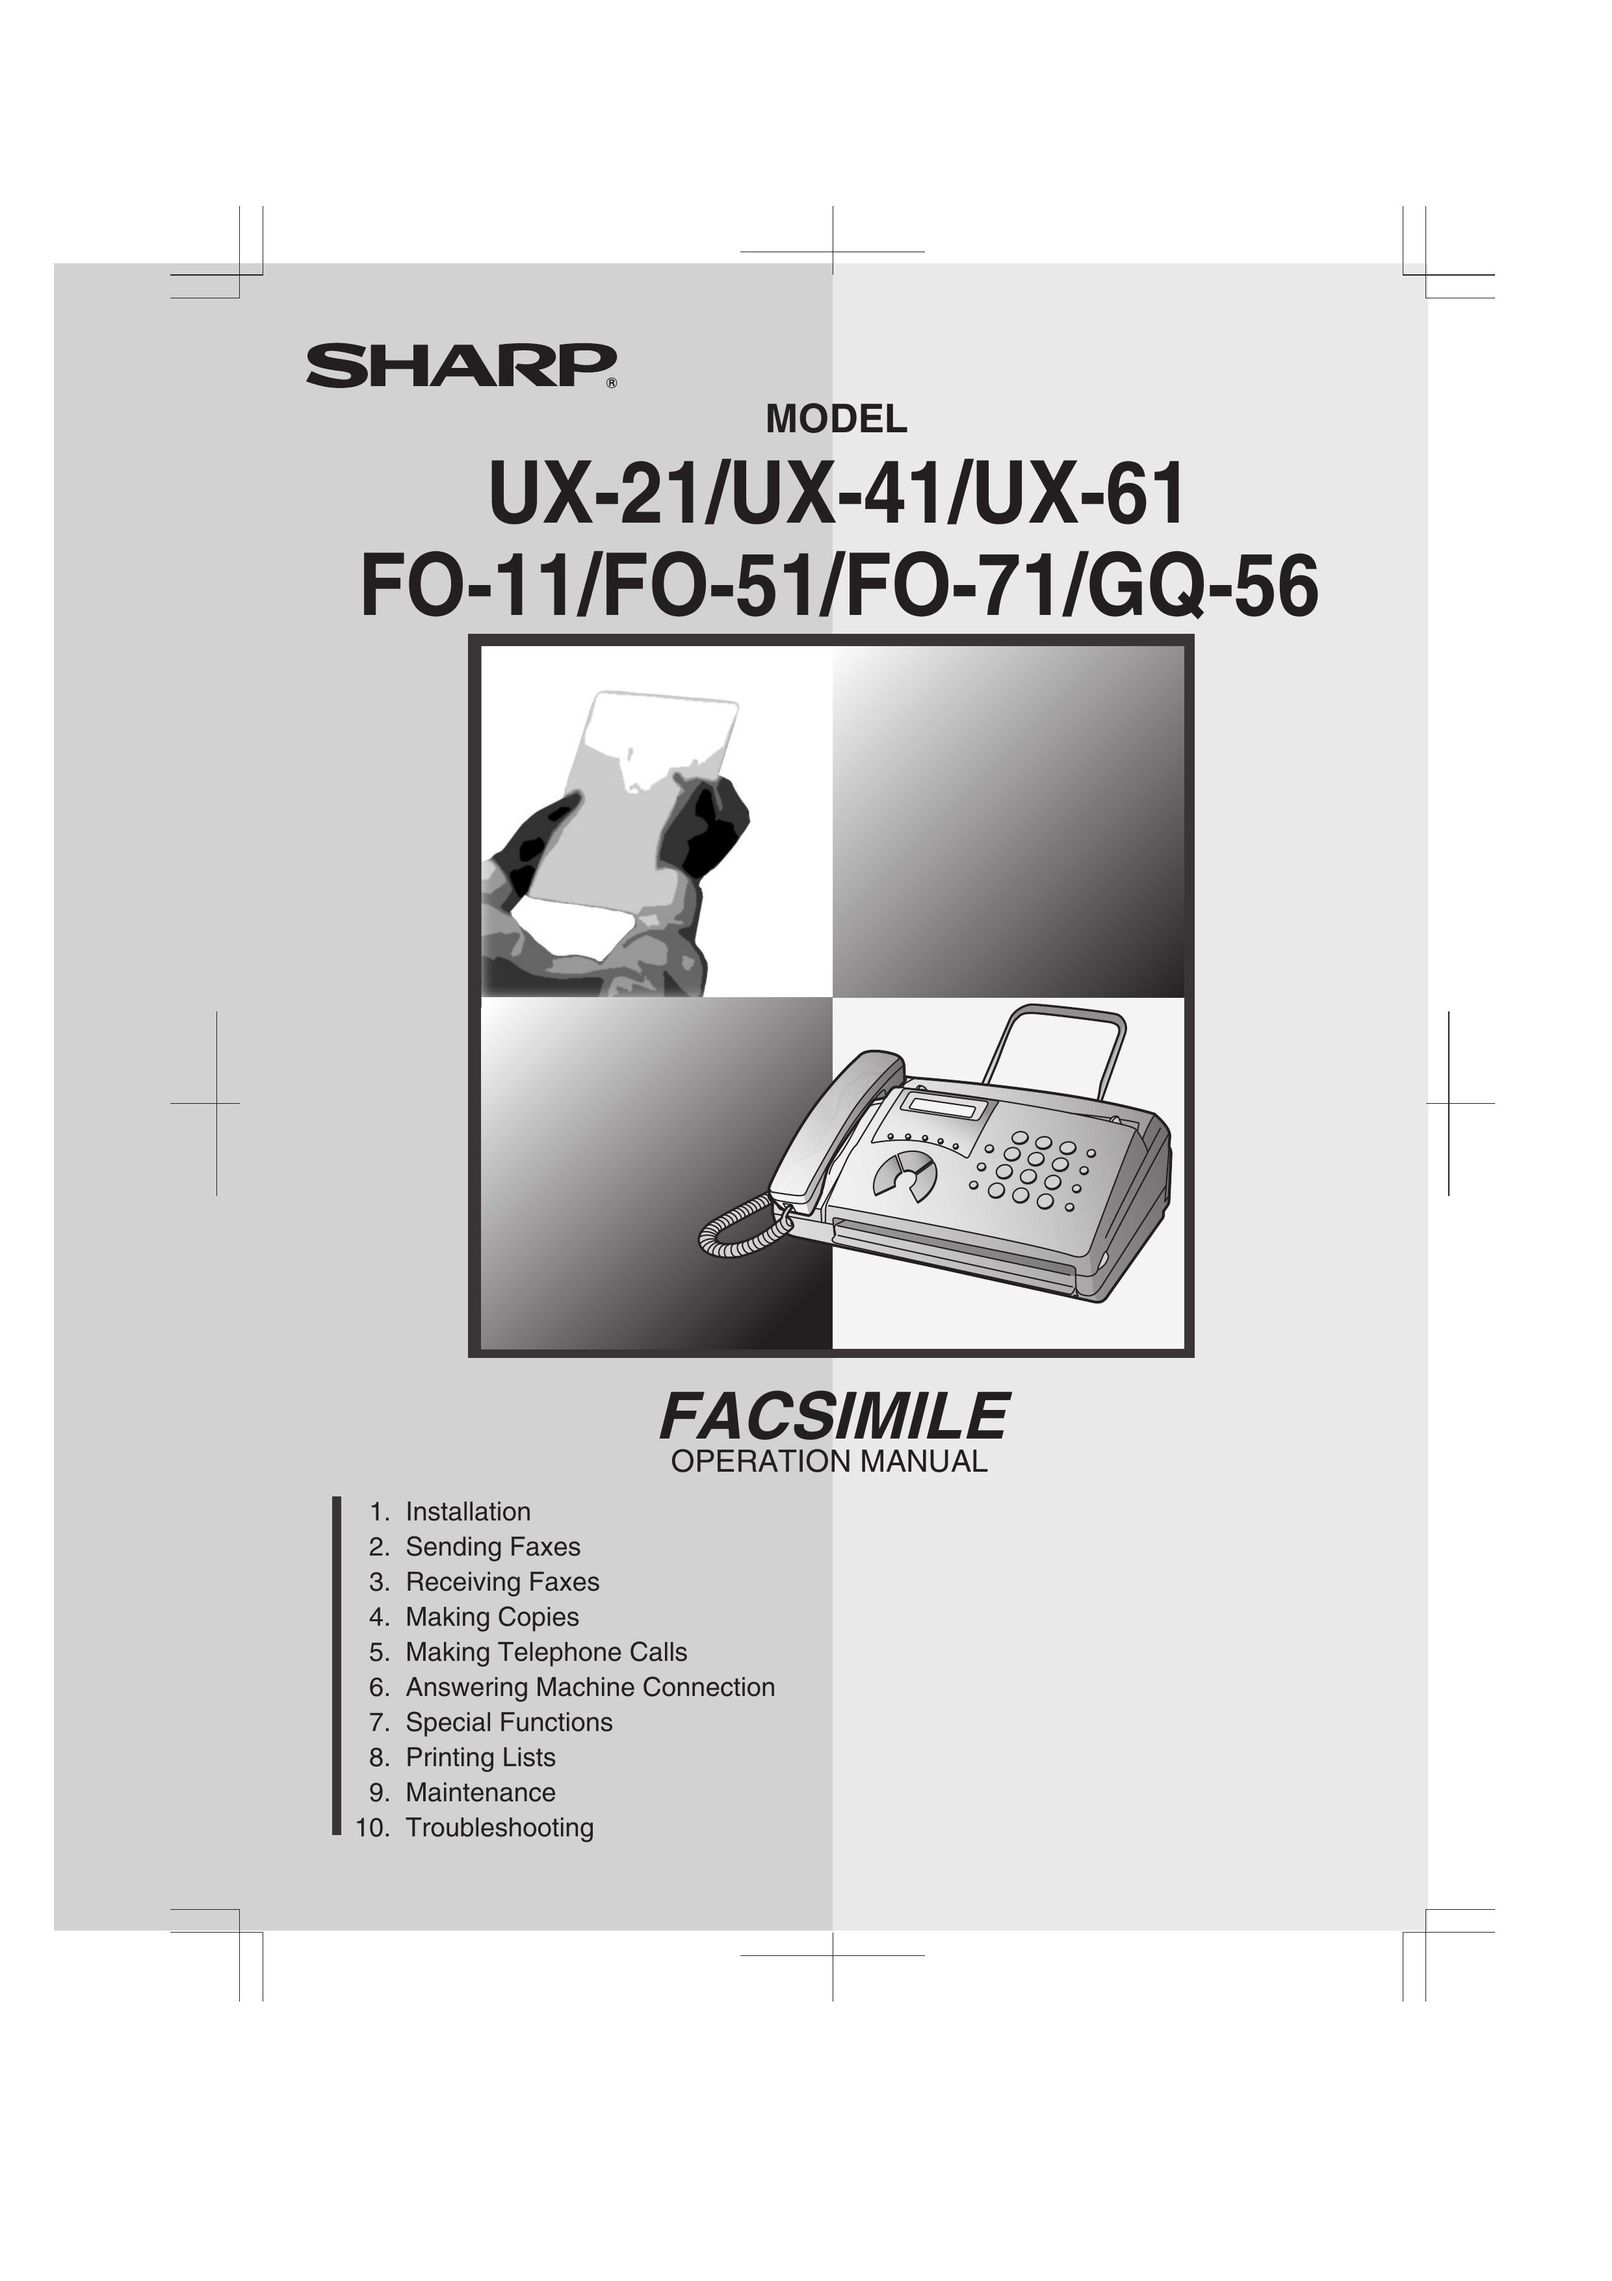 Sharp FO-11 Fax Machine User Manual